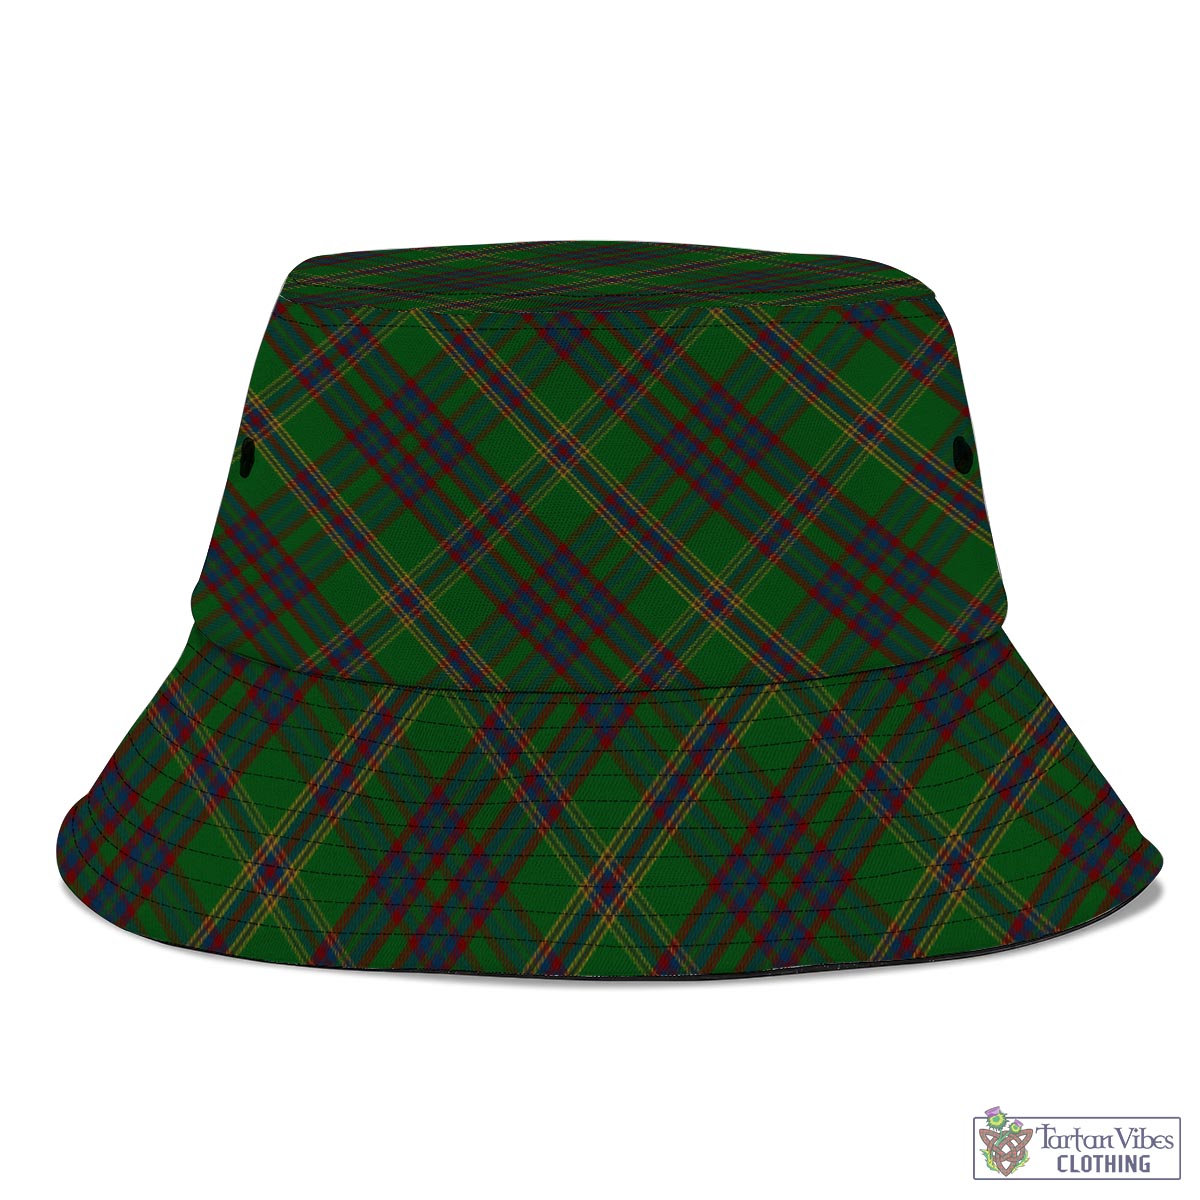 Tartan Vibes Clothing Westmeath County Ireland Tartan Bucket Hat